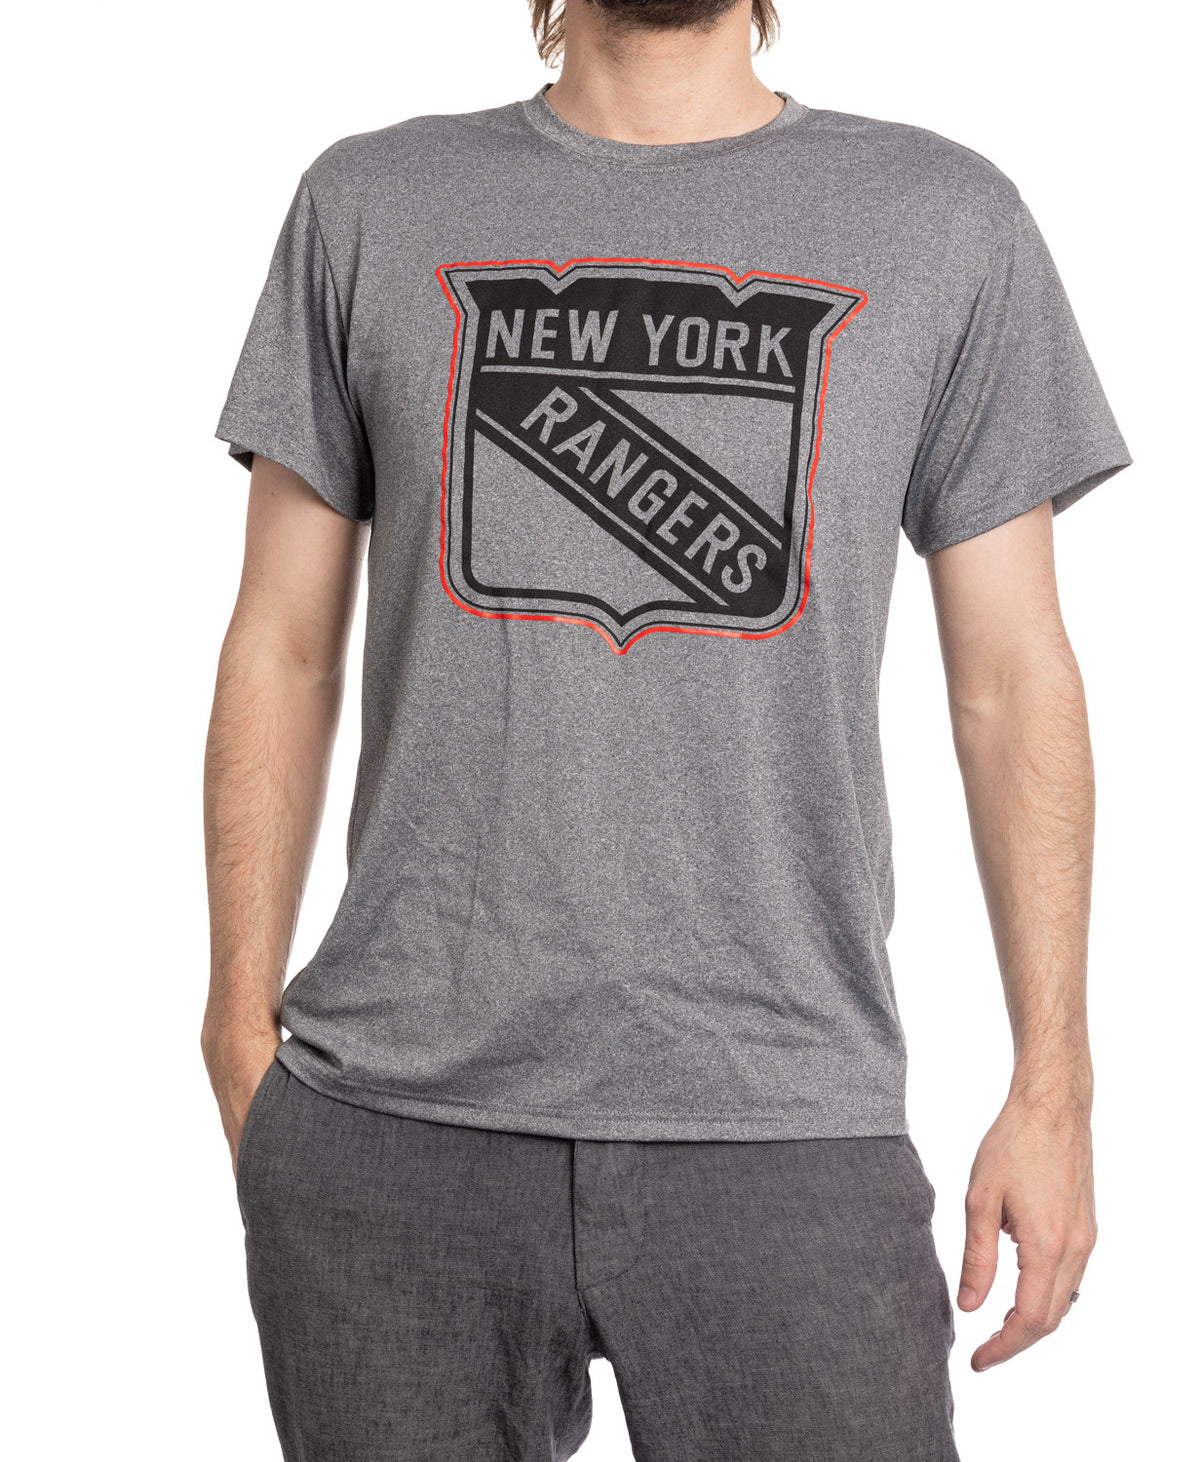 New York Rangers NHL Men's Performance Rash Guard Base Layer Moisture-Wicking T-Shirt - Grey